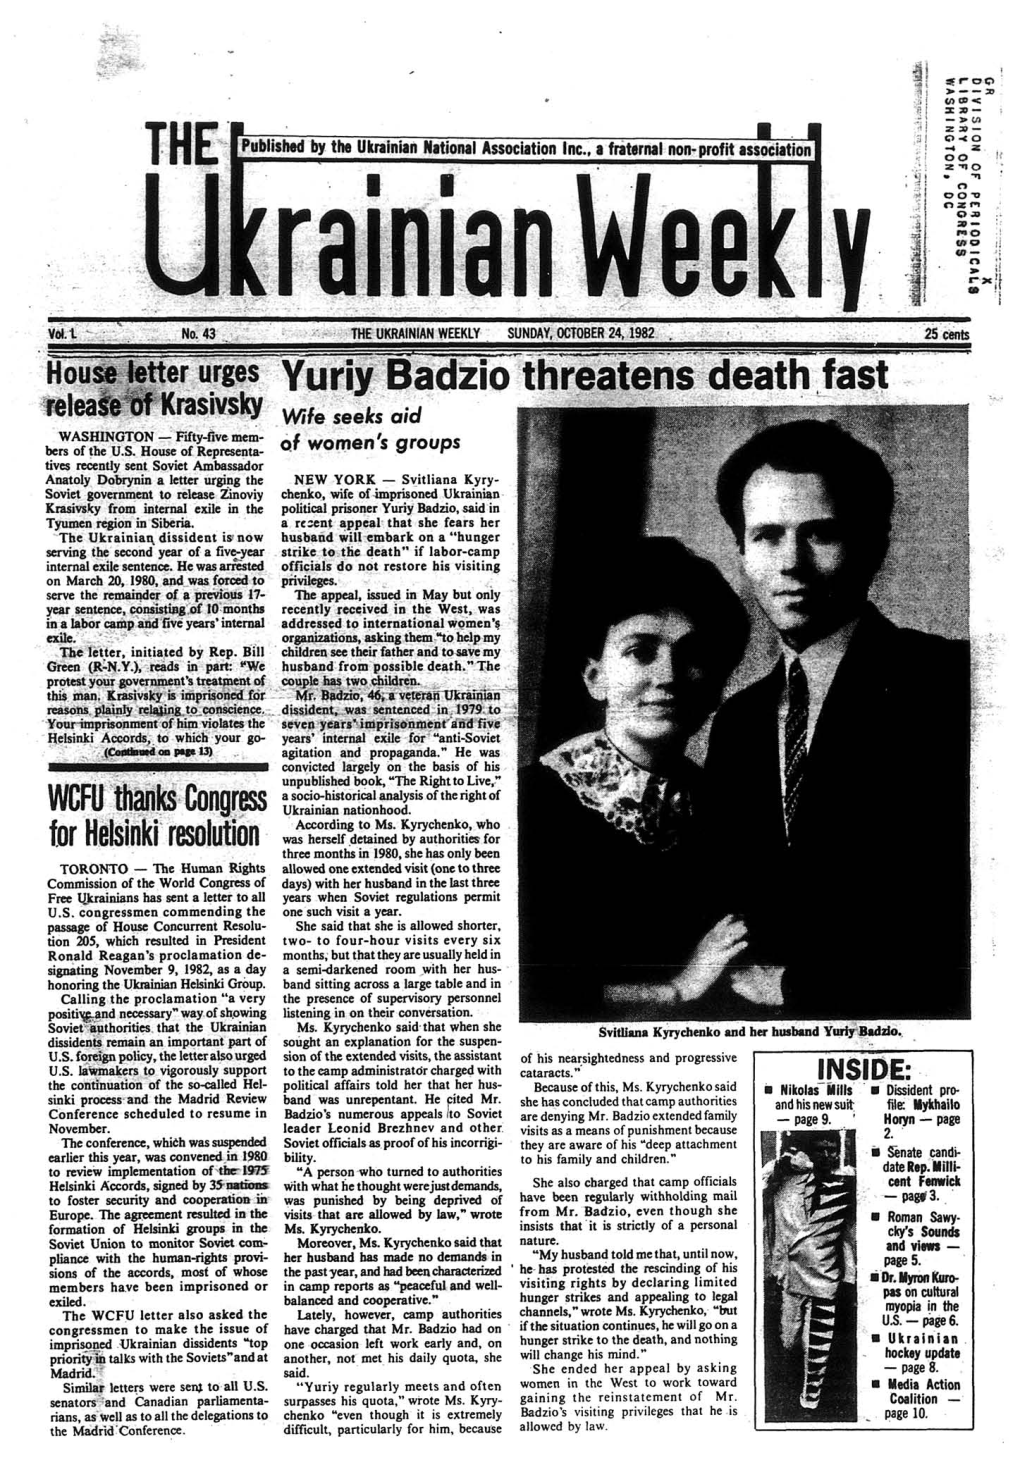 The Ukrainian Weekly 1982, No.43